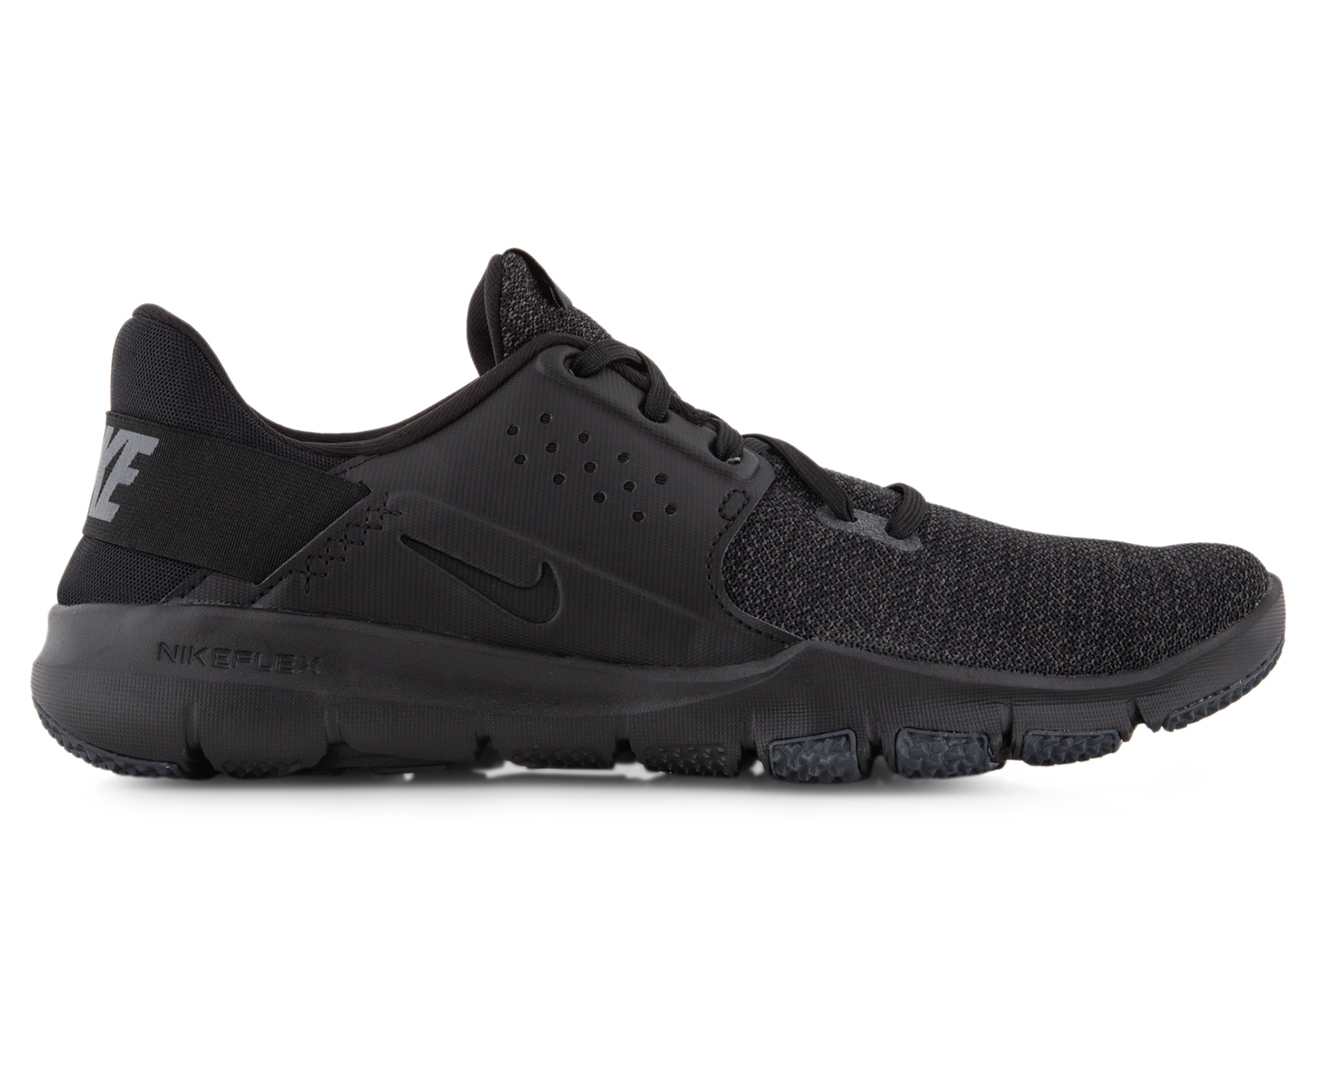 Nike Men's Flex Control TR3 Shoe - Black/Anthracite/White | Catch.co.nz